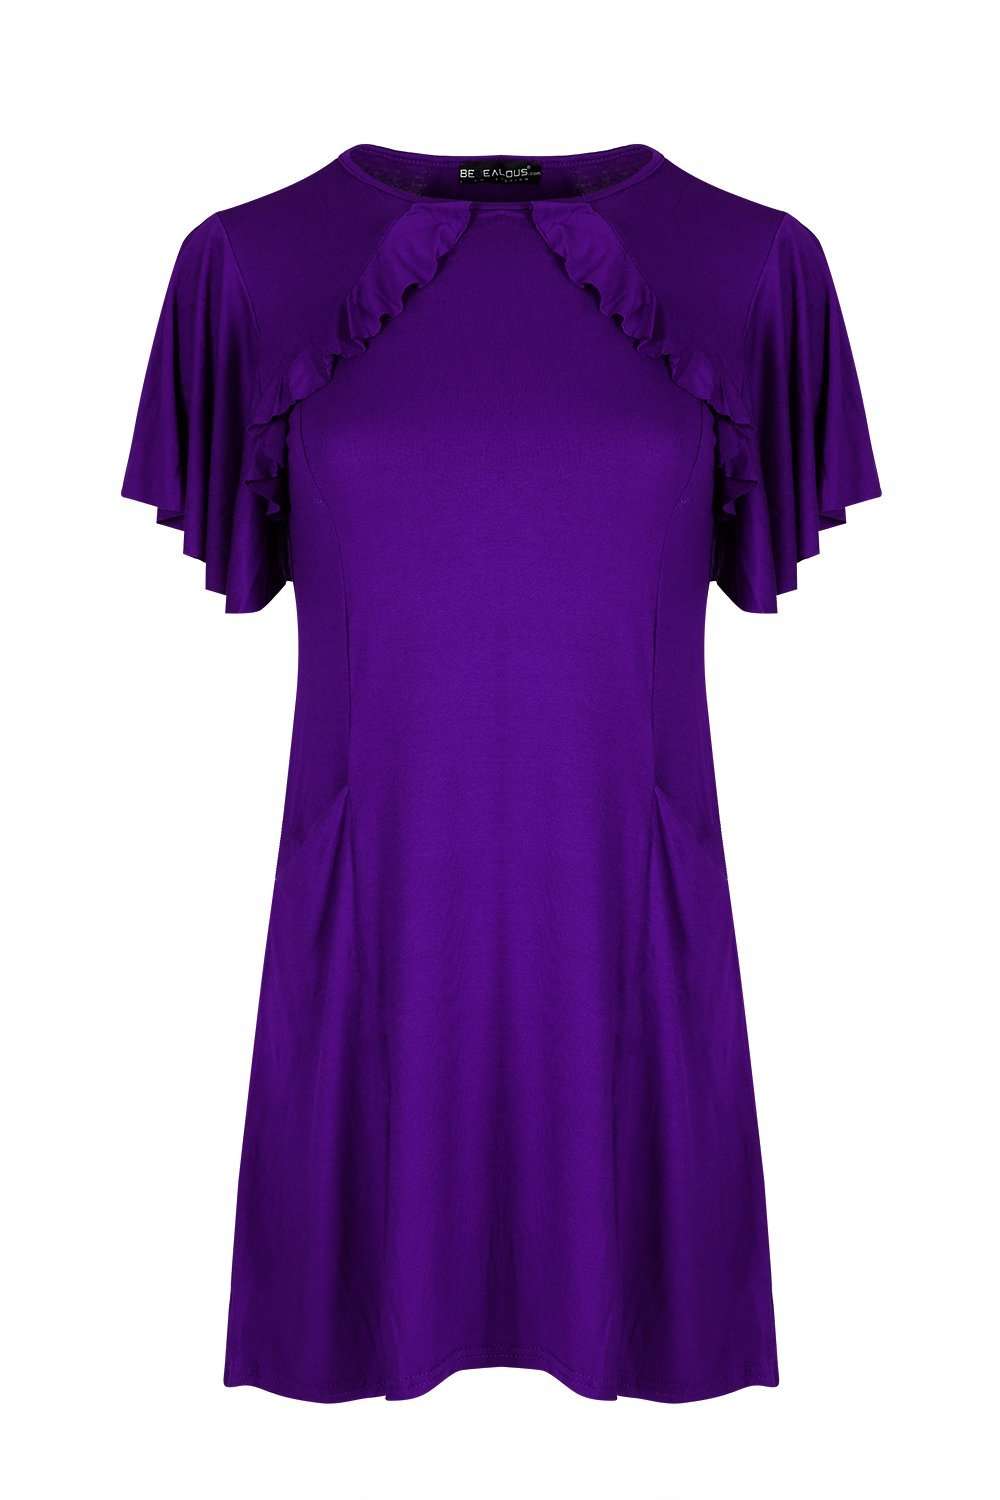 Hayley Frilly Basic Oversized Tshirt Dress - bejealous-com